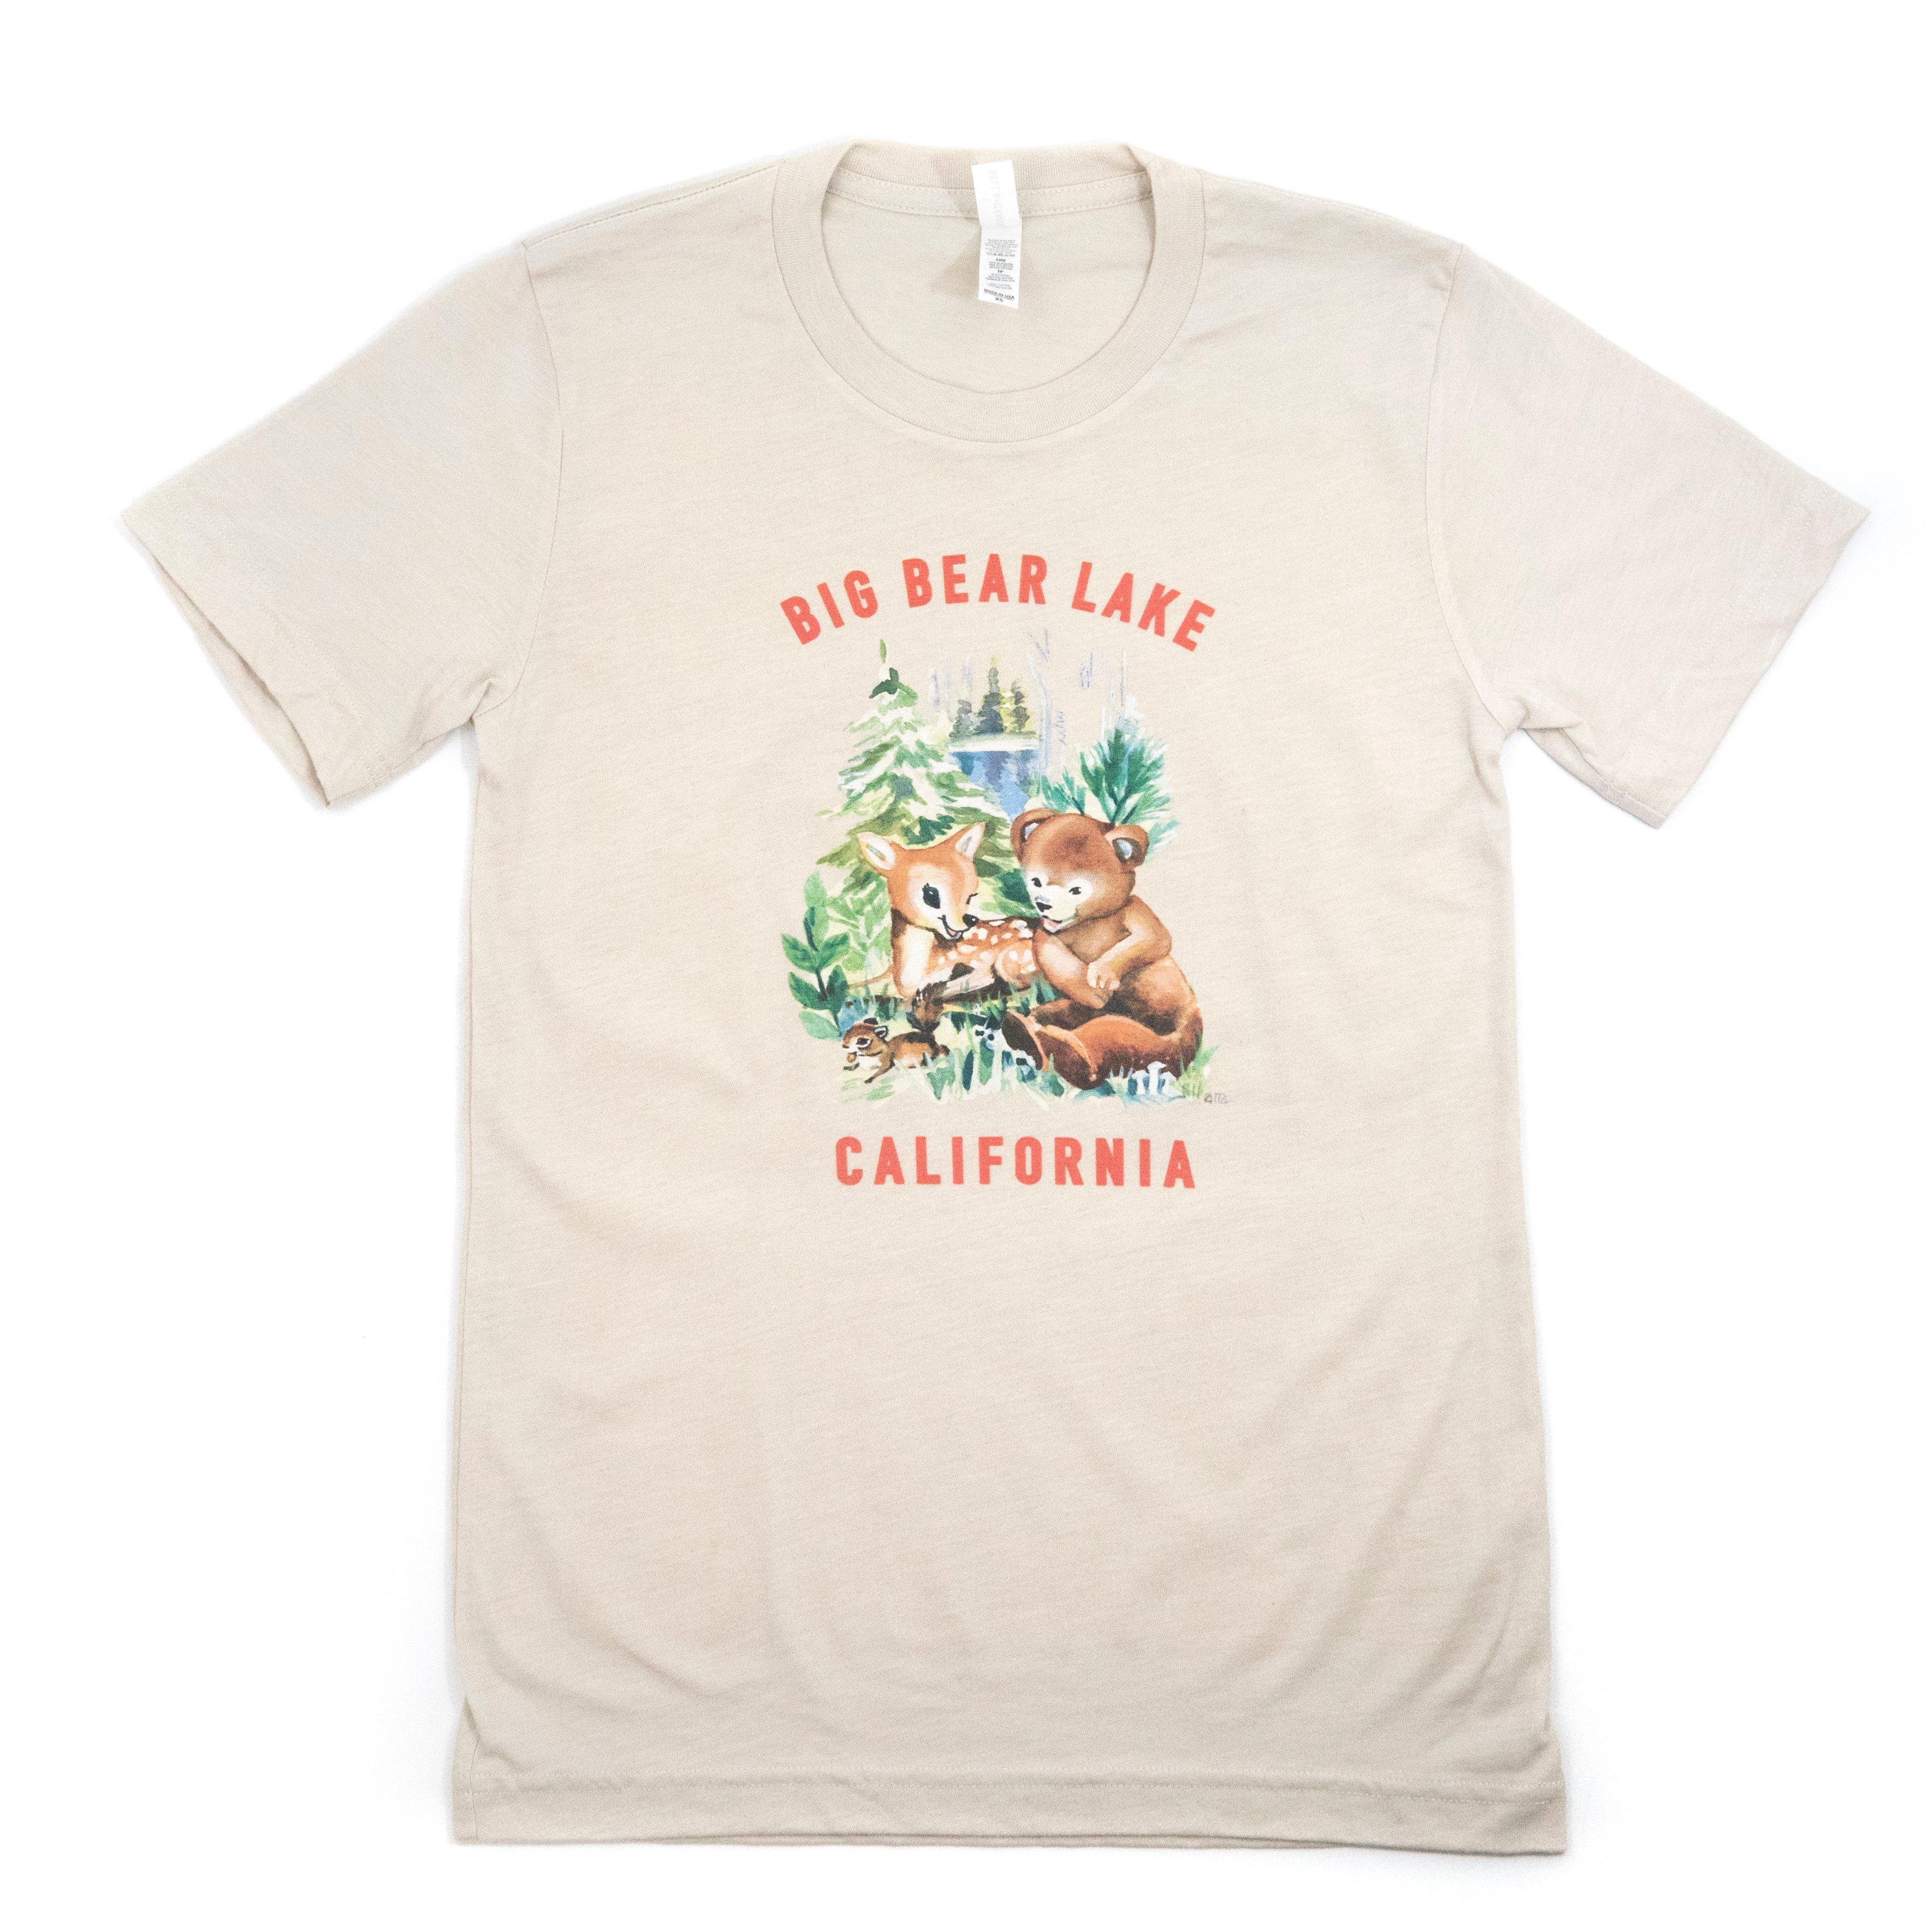 Big Bear Lake Forest Babies Tee - Custom Logo - Souvenir Item - Hand Drawn Logo - Unisex T-Shirt - Women's Clothing Store - Boutique - O KOO RAN - Big Bear Lake California